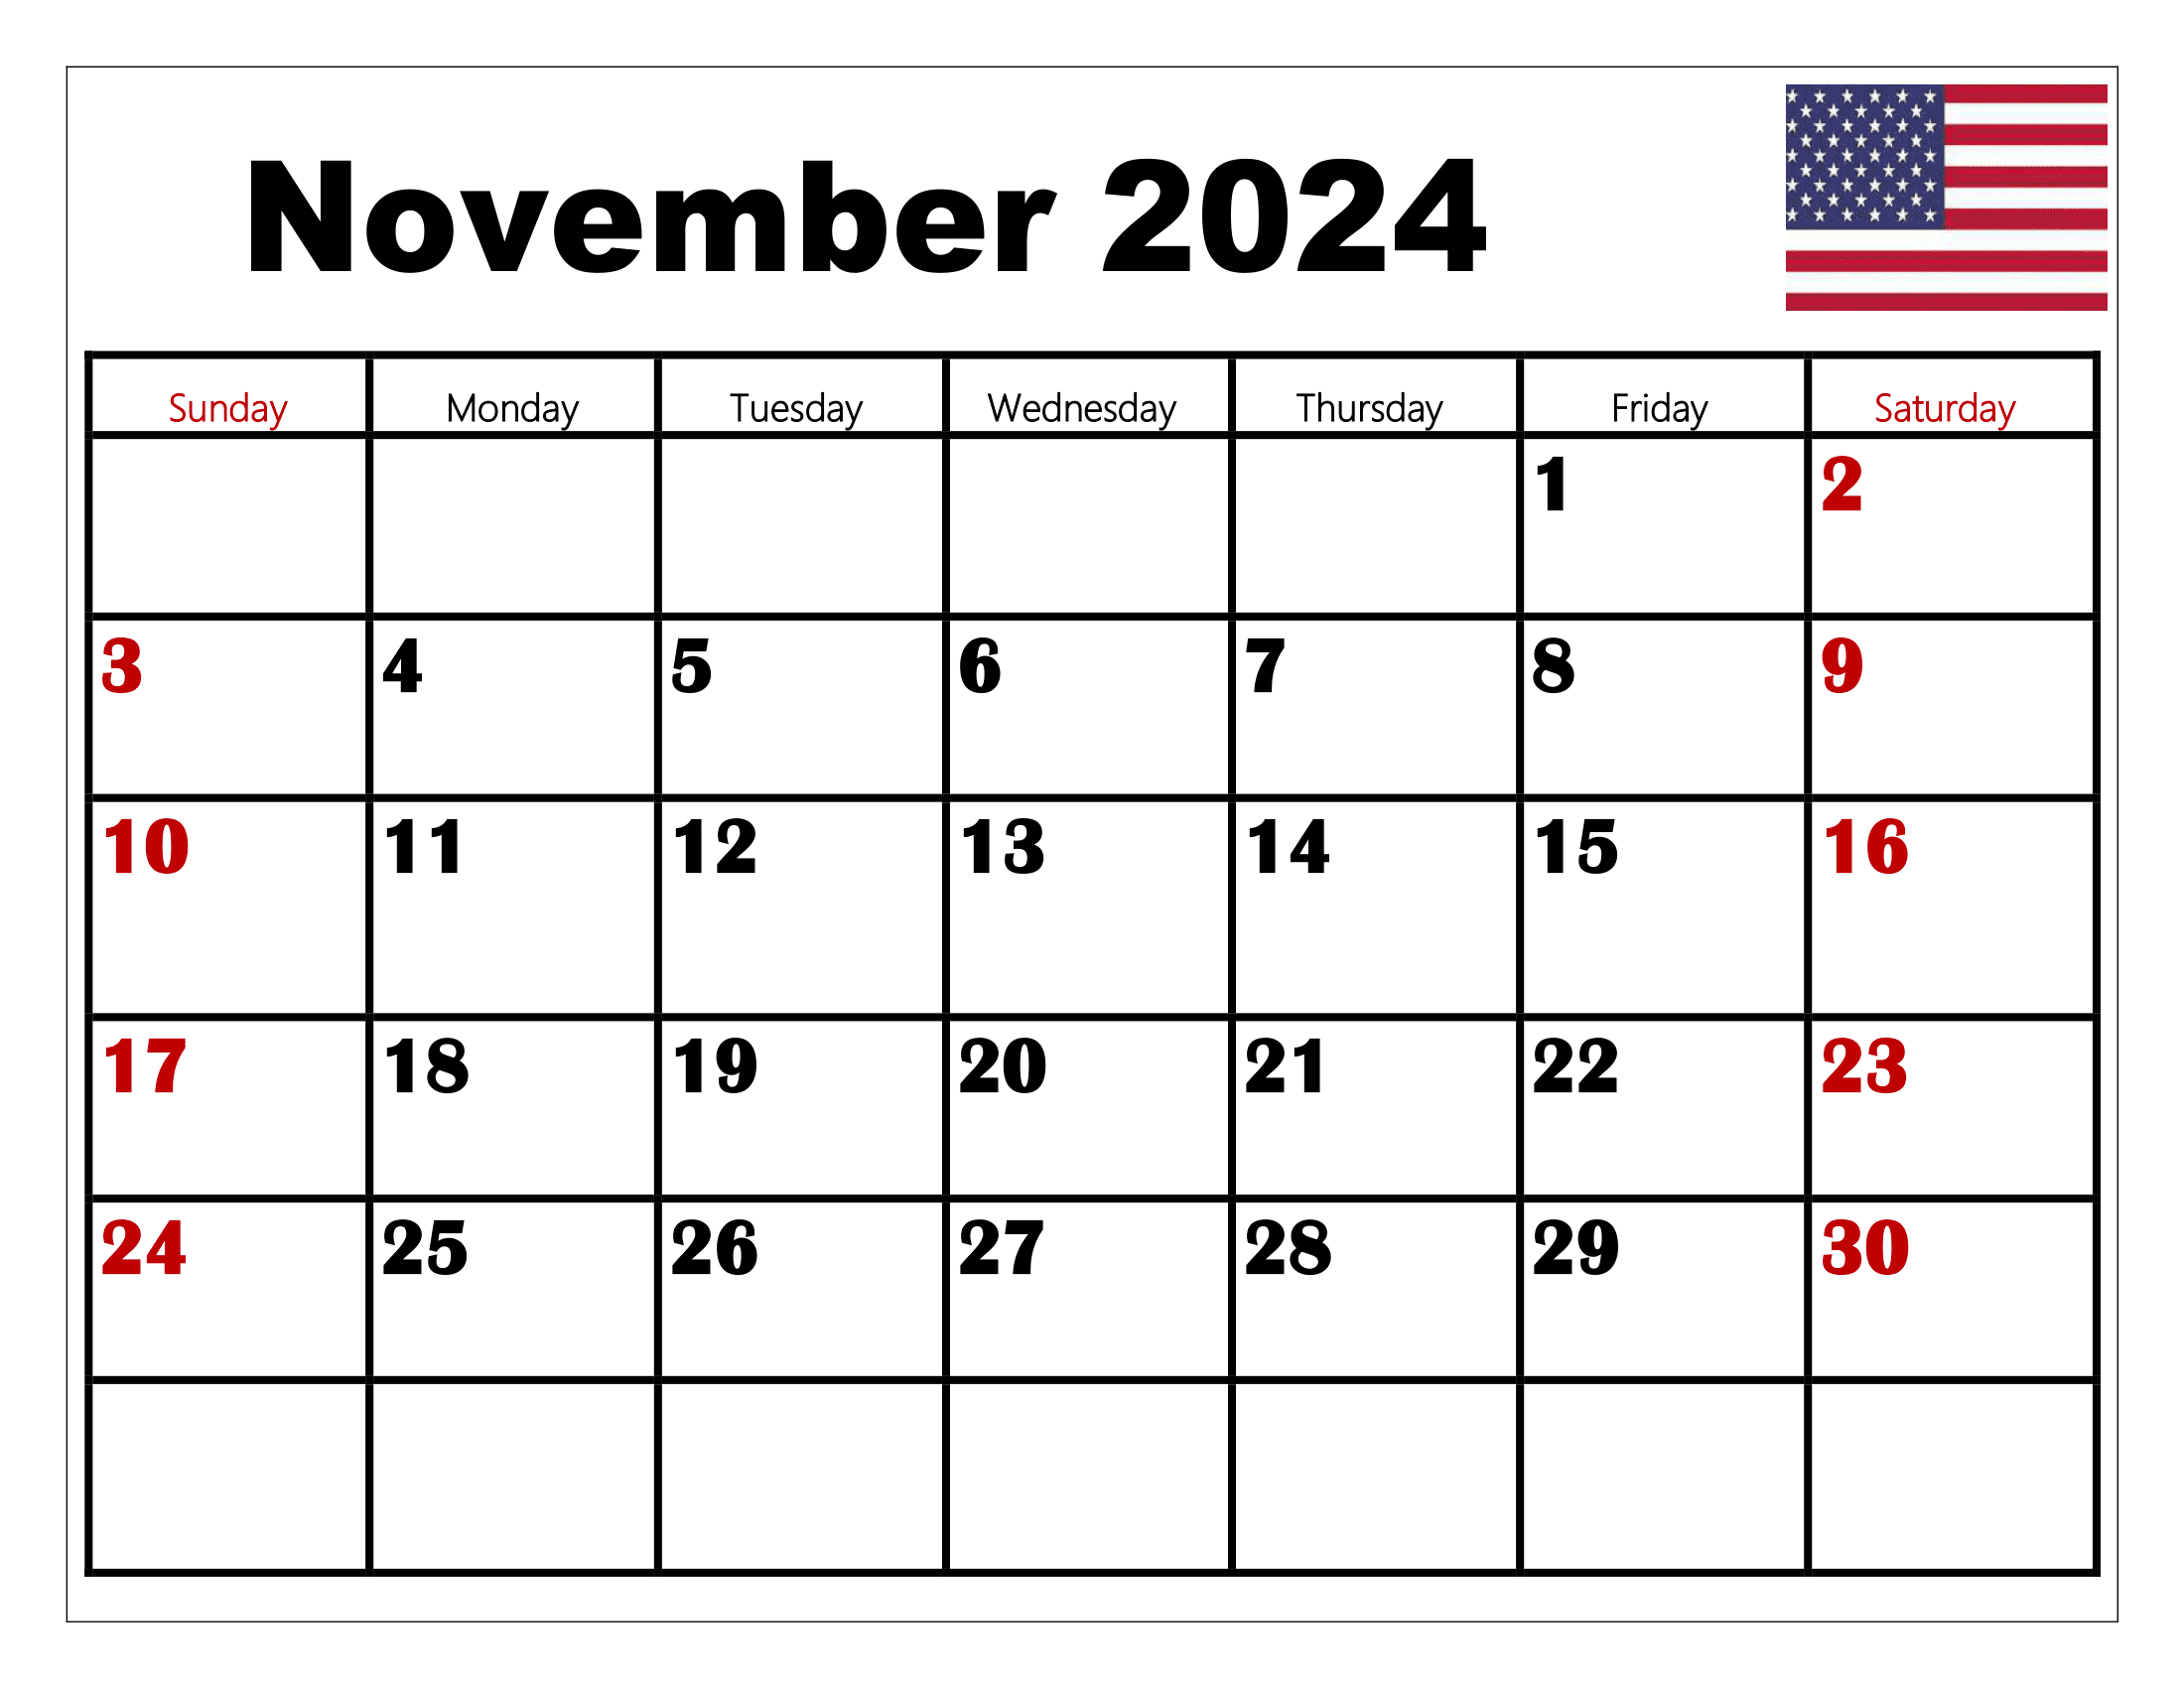 November 2024 Calendar Printable Pdf Template With Holidays for Free Printable Blank Calendar 2024 November